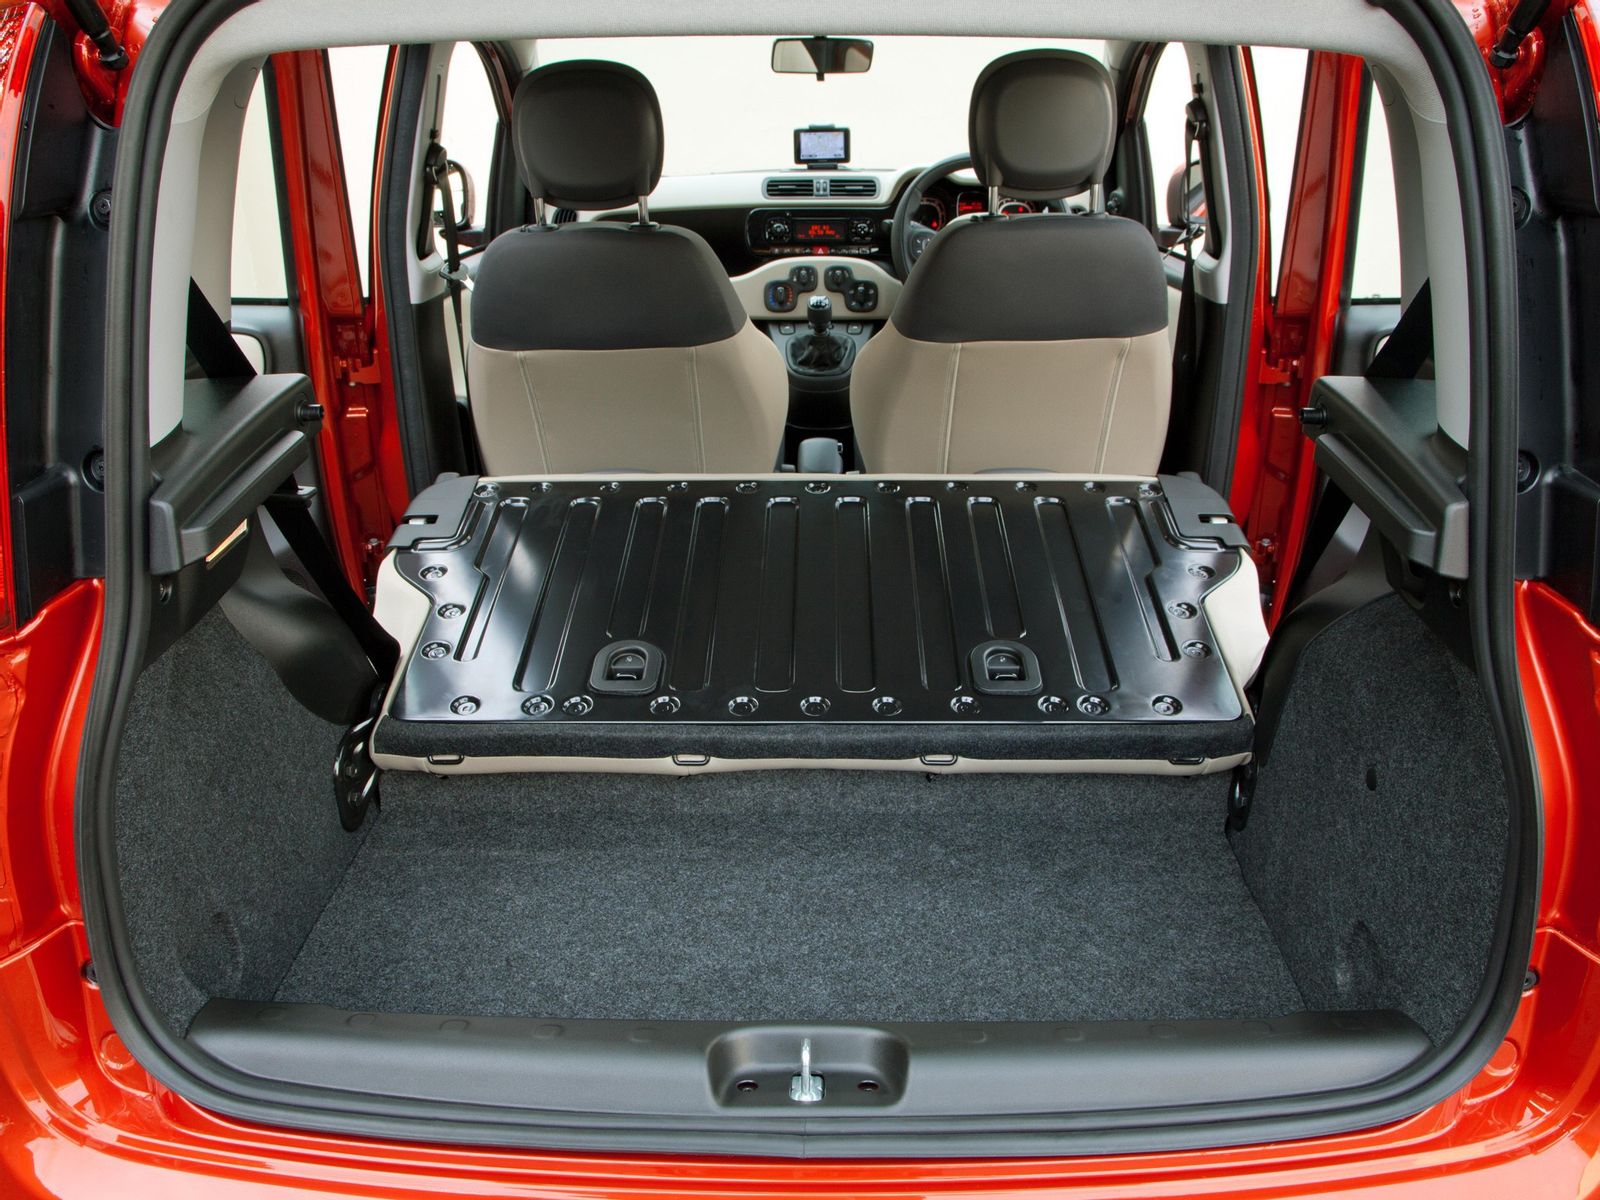 FIAT_PANDA_hatchback_5_2012_interior-photos_o_fiat-panda-hatchback-5-doors-2012-model-interior...jpg